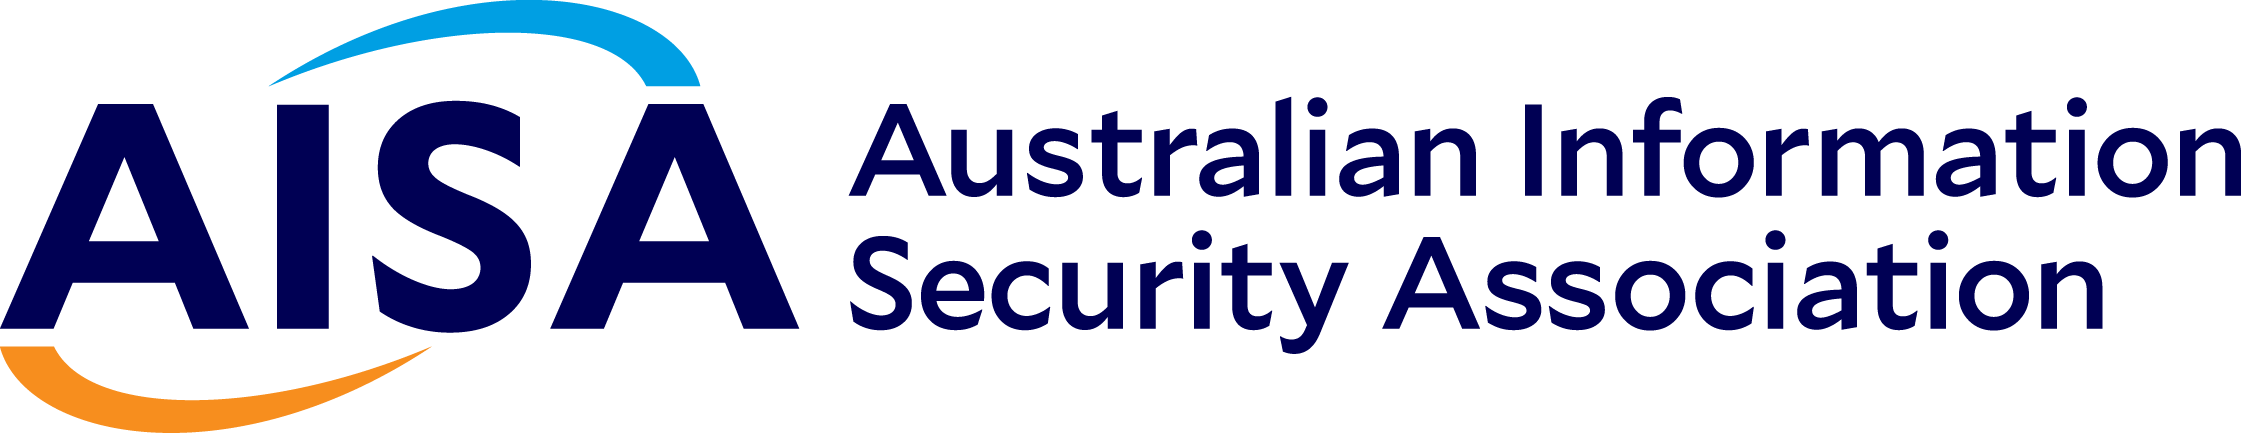 Logo da Australian Information Security Association (AISA)